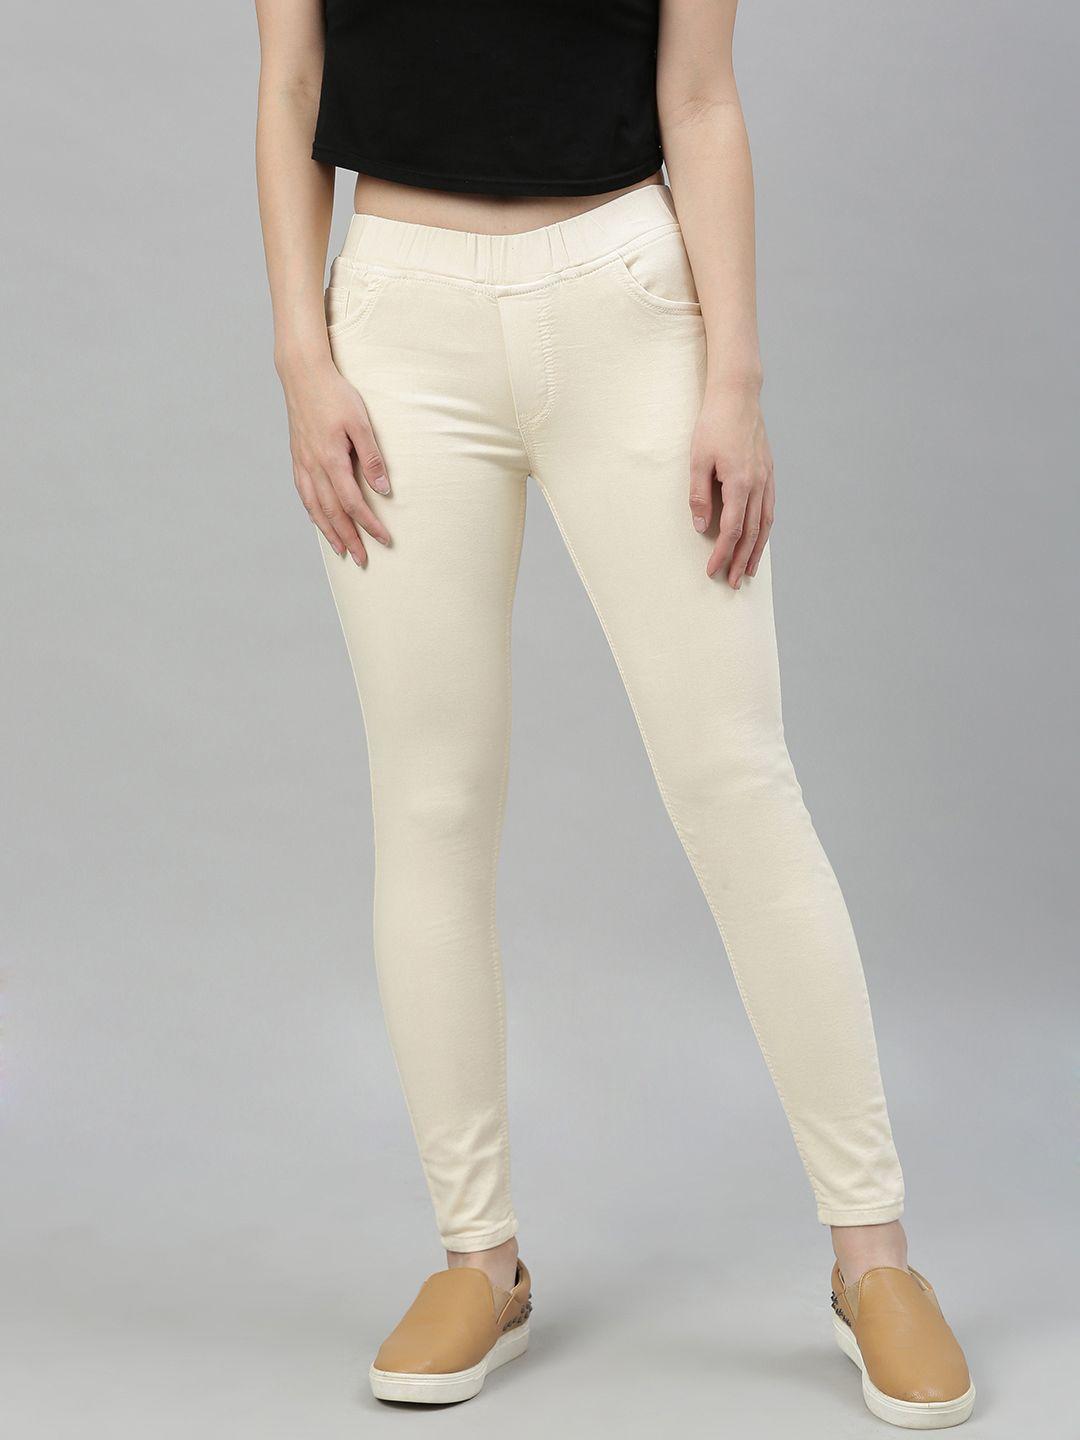 adbucks women's beige solid denim lycra jeggings with 5 pocket & elasticated waistband